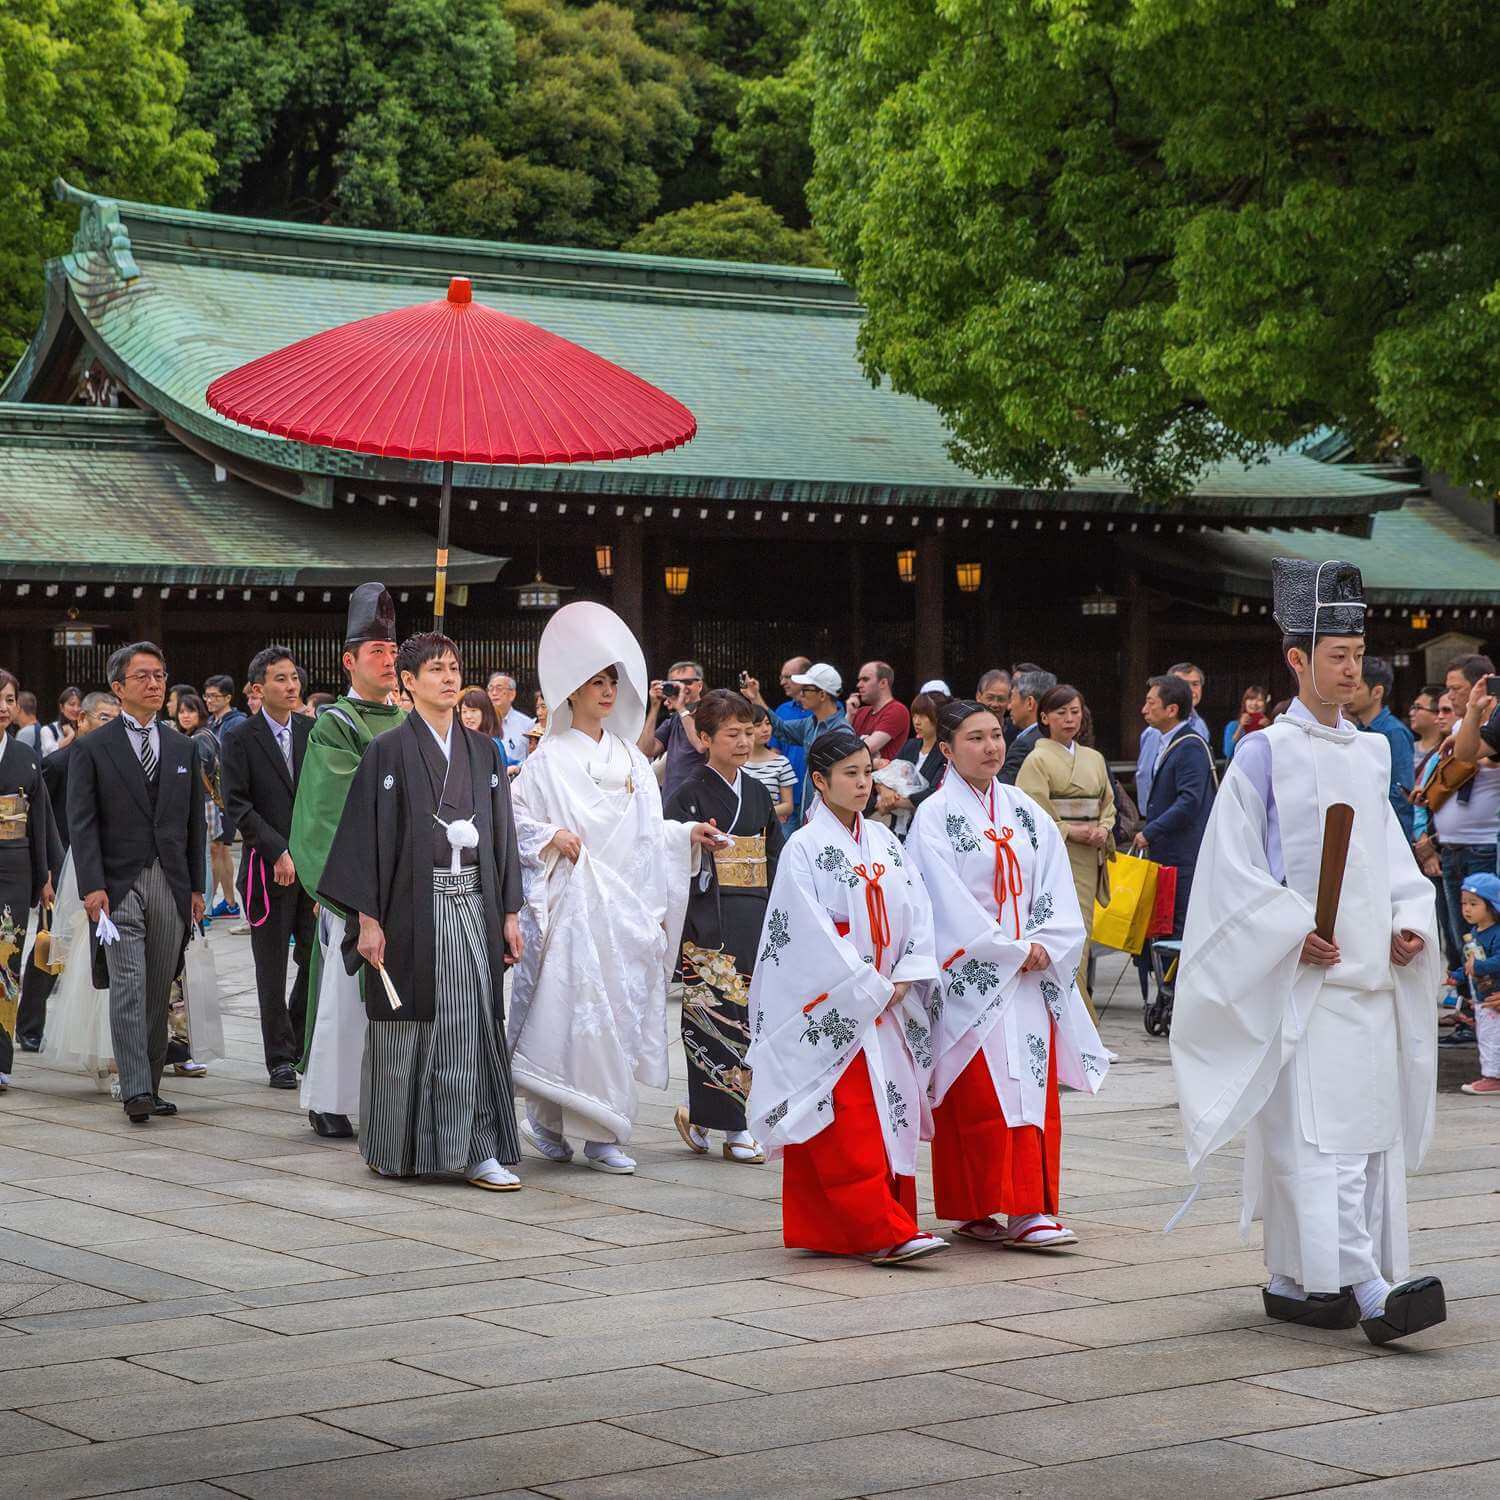 Wedding parties and family members parade through the inner ground of the Meiji Jingu Shrine, Tokyo = Shutterstock